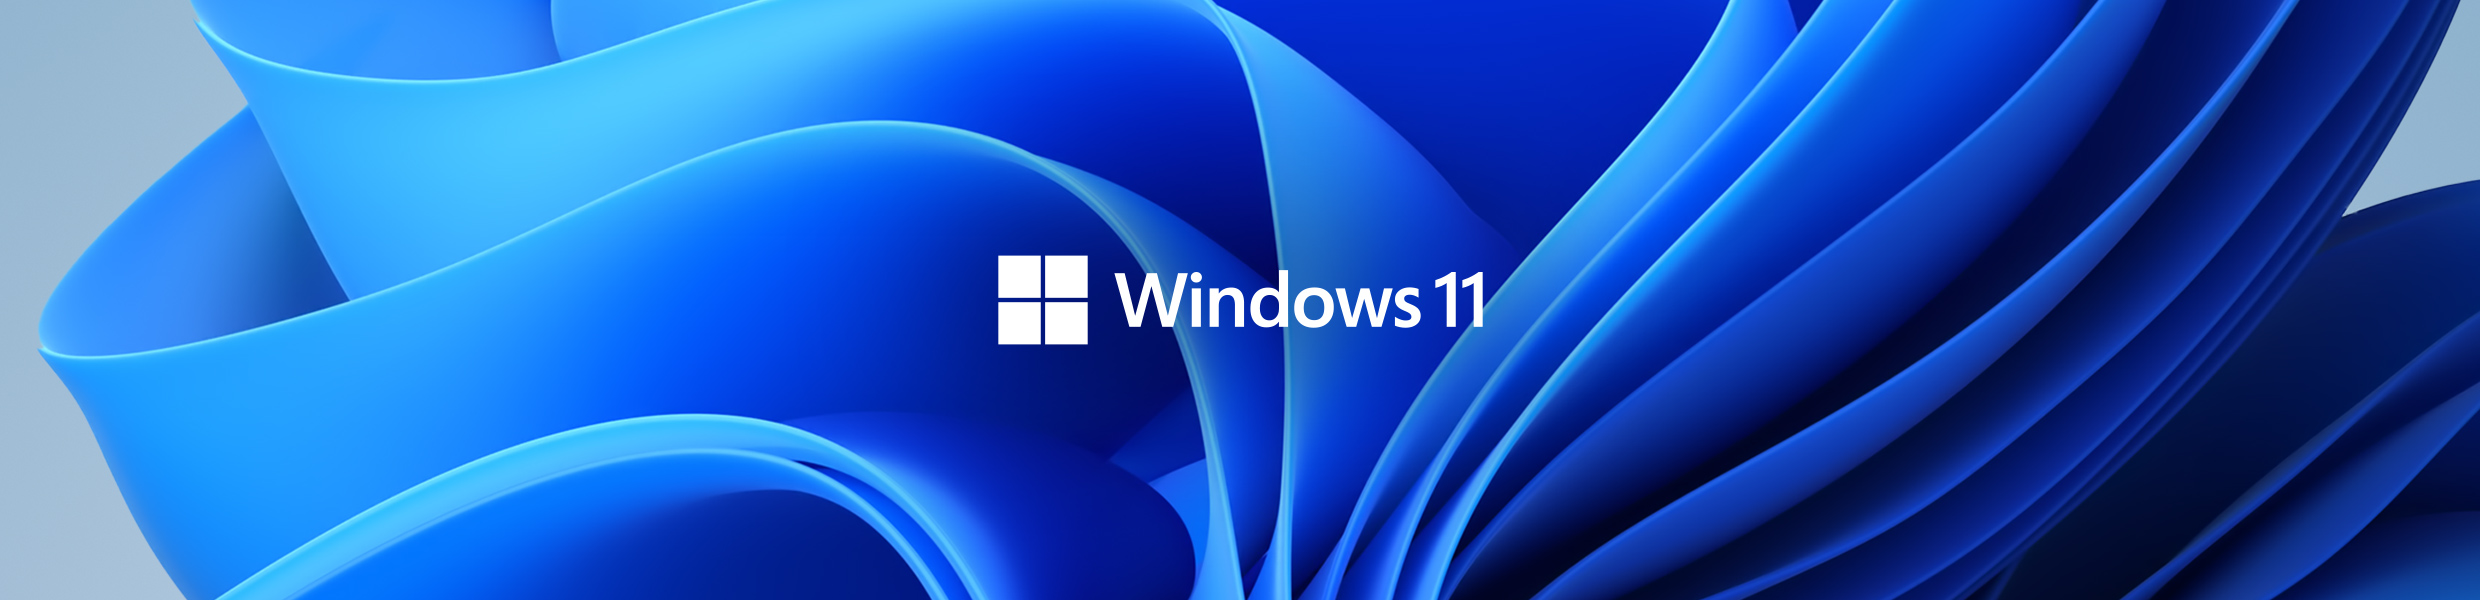 Windows 11 software download for pc - birthdaymaz